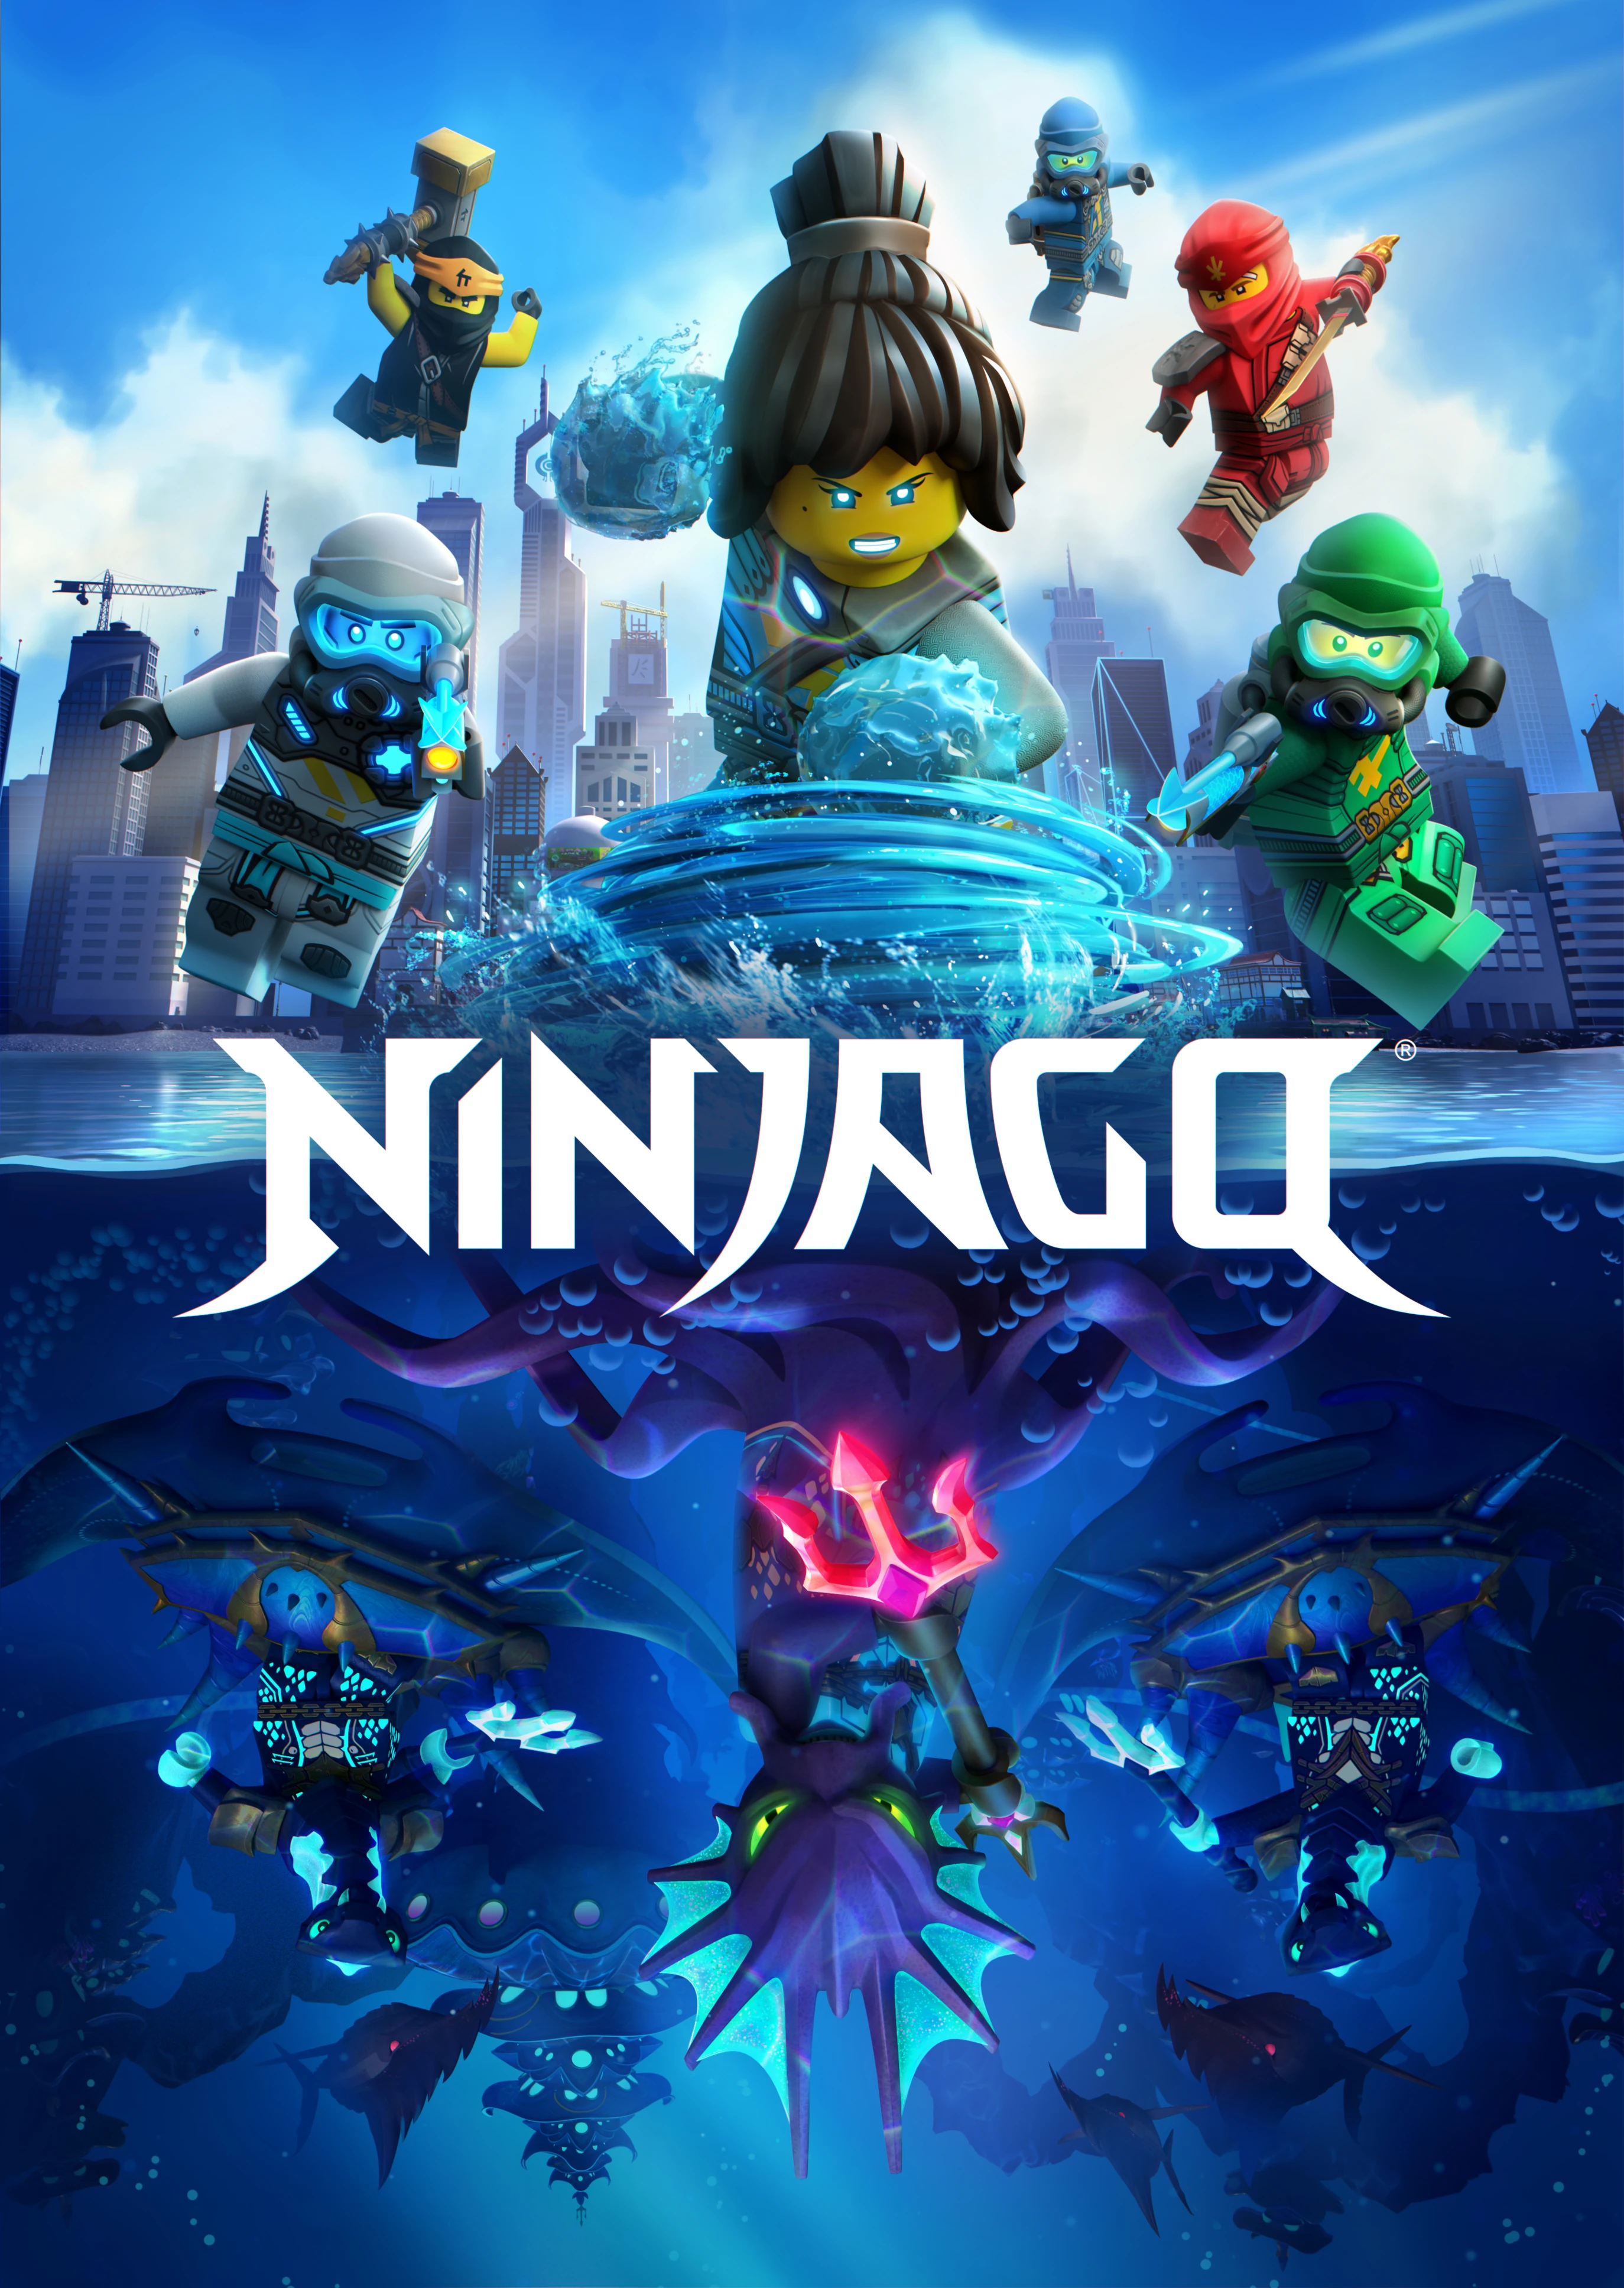 Ninjago seabound gpn event